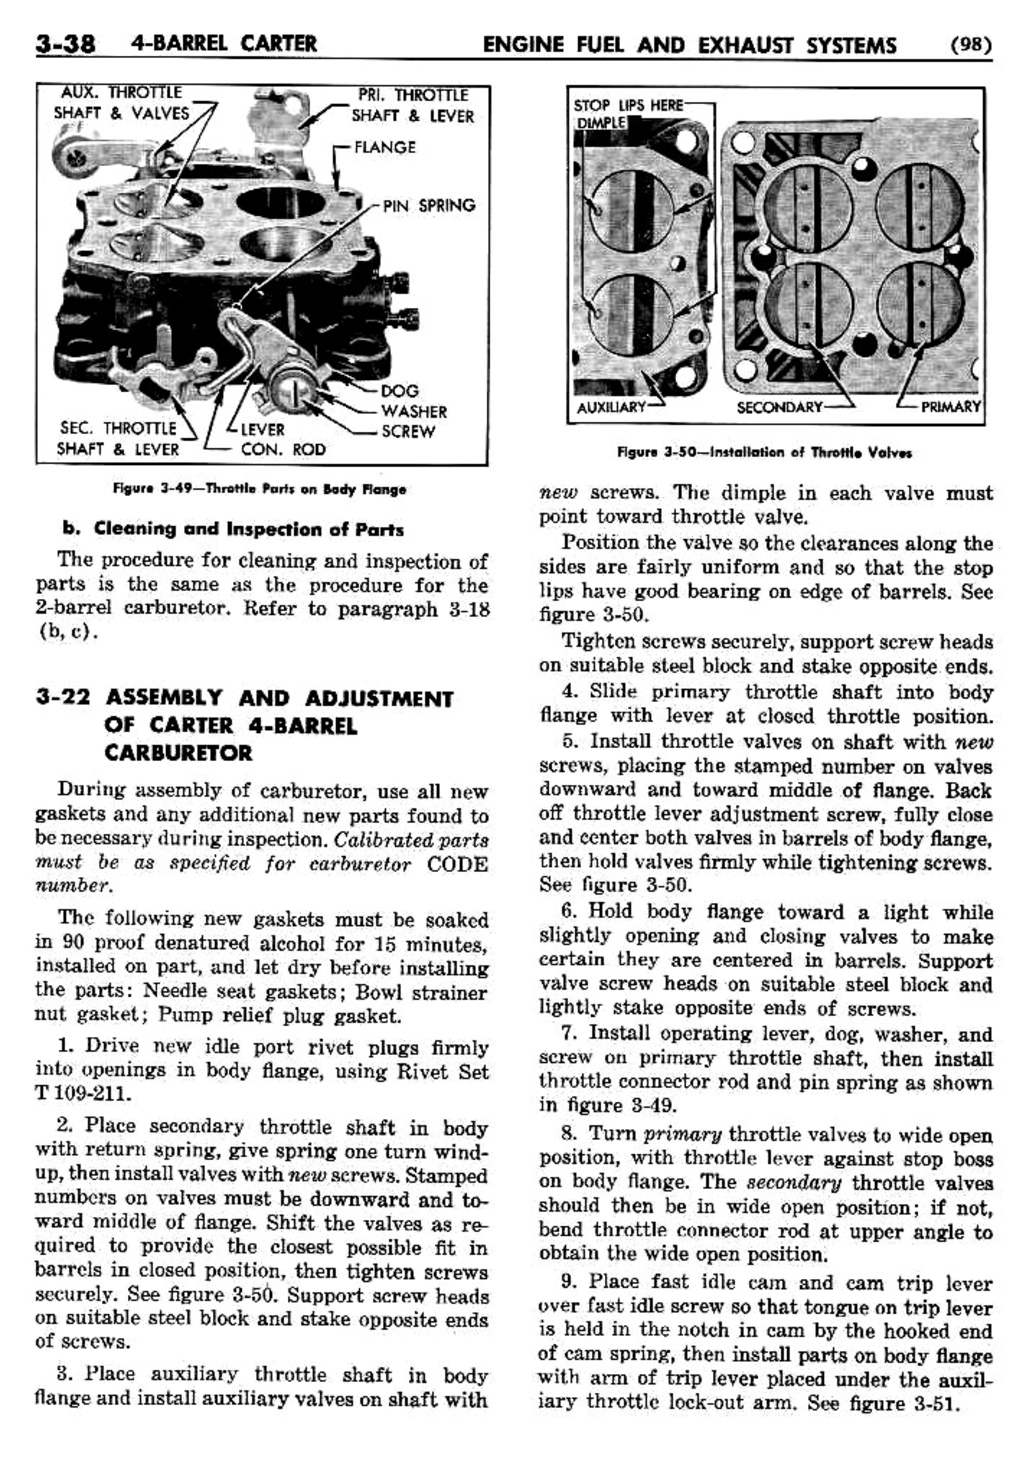 n_04 1956 Buick Shop Manual - Engine Fuel & Exhaust-038-038.jpg